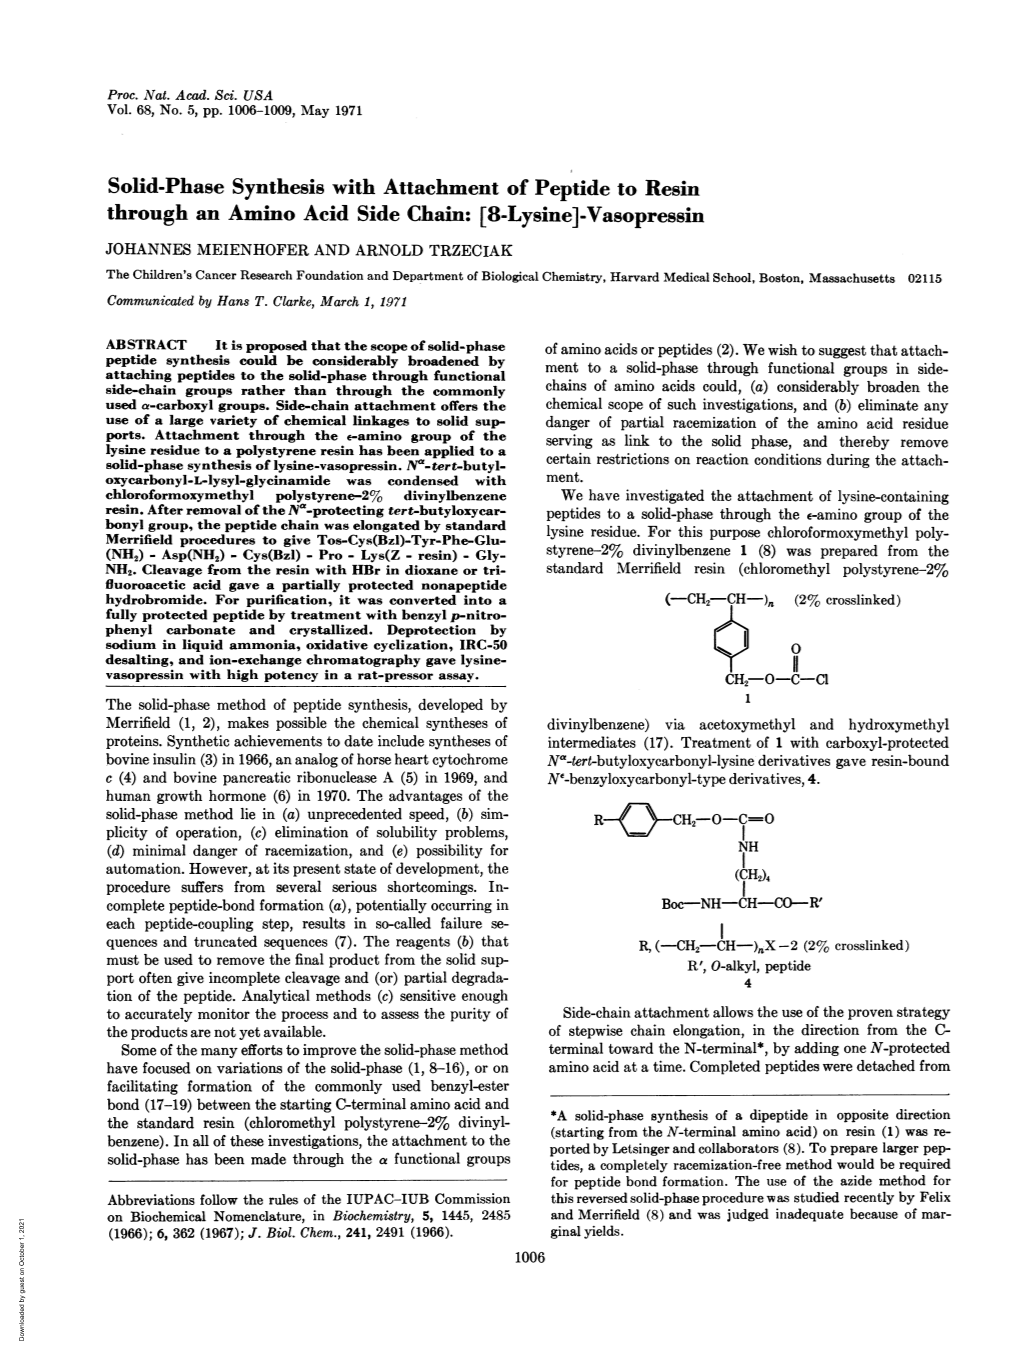 Through an Amino Acid Side Chain: [8-Lysine]-Vasopressin